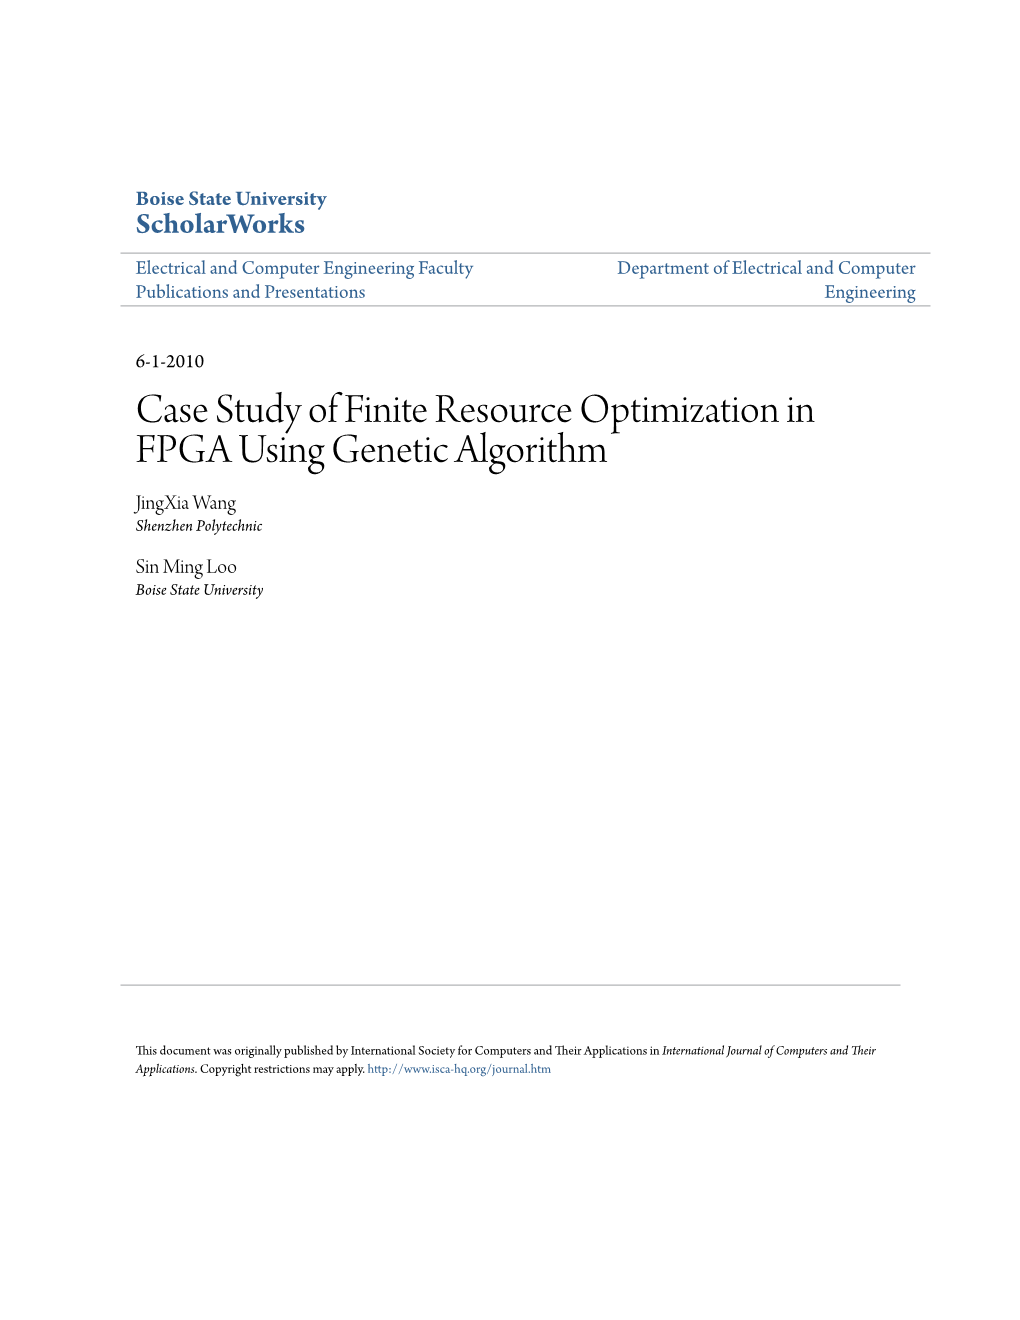 Case Study of Finite Resource Optimization in FPGA Using Genetic Algorithm Jingxia Wang Shenzhen Polytechnic